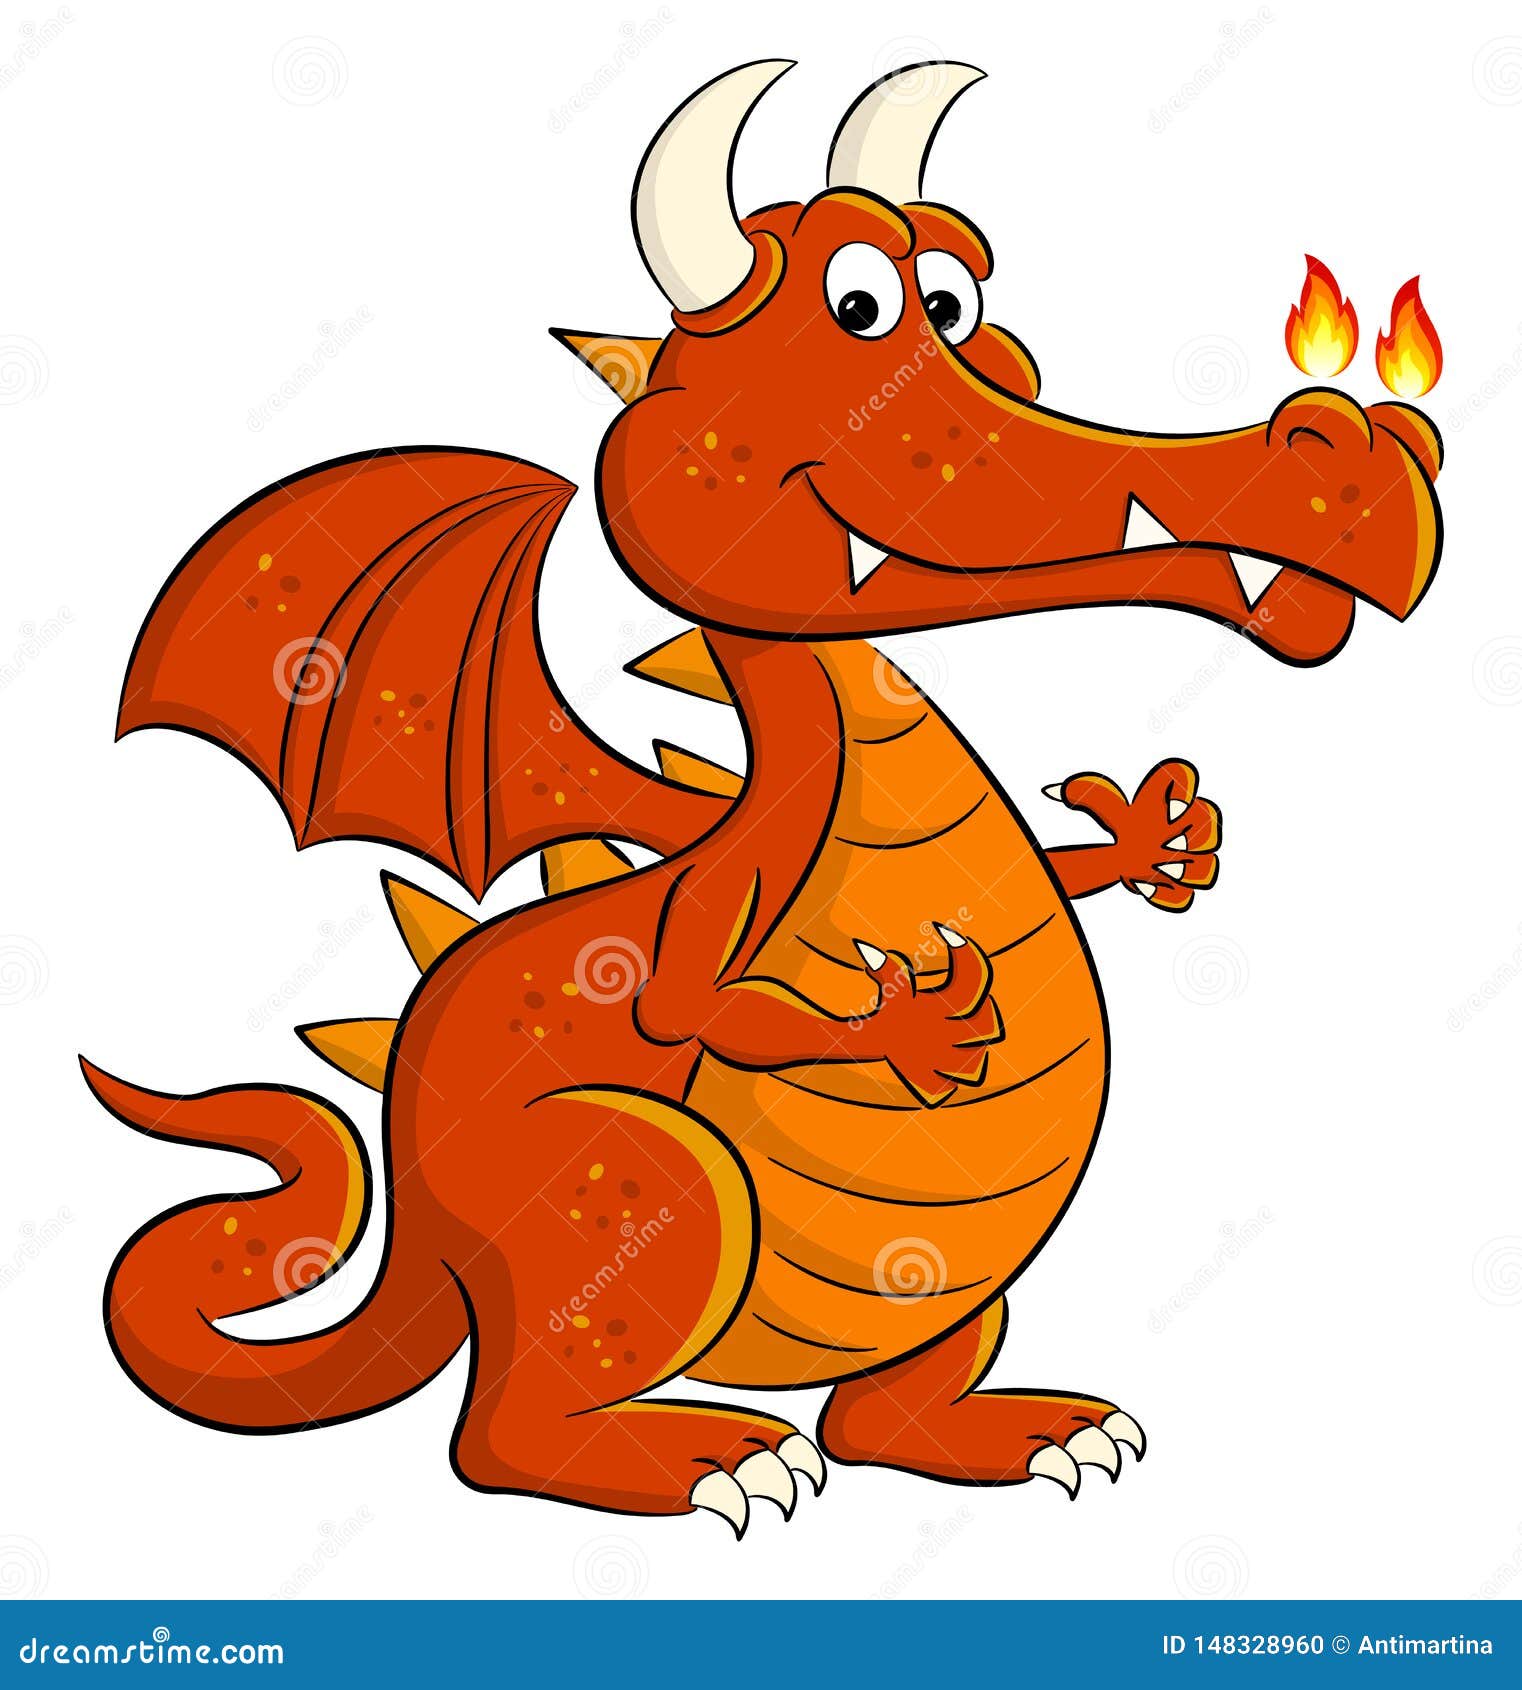 Friendly cartoon dragon stock vector. Illustration of smile - 148328960